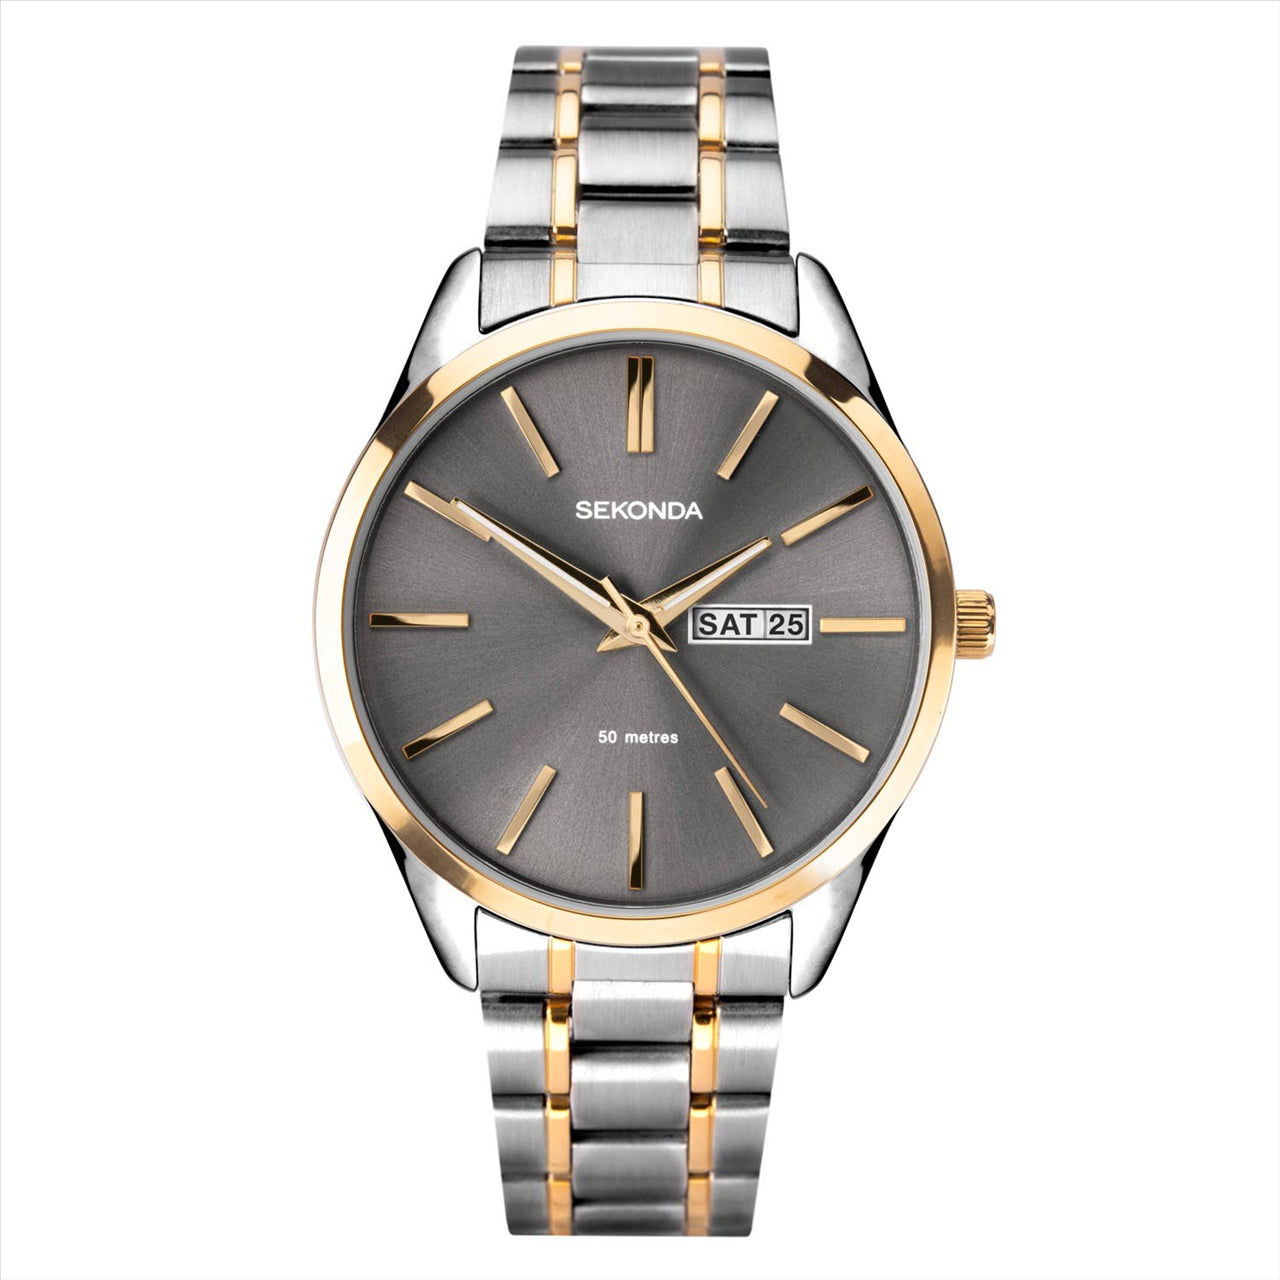 Gents Silver/Gold Case + Bracelet Band Watch